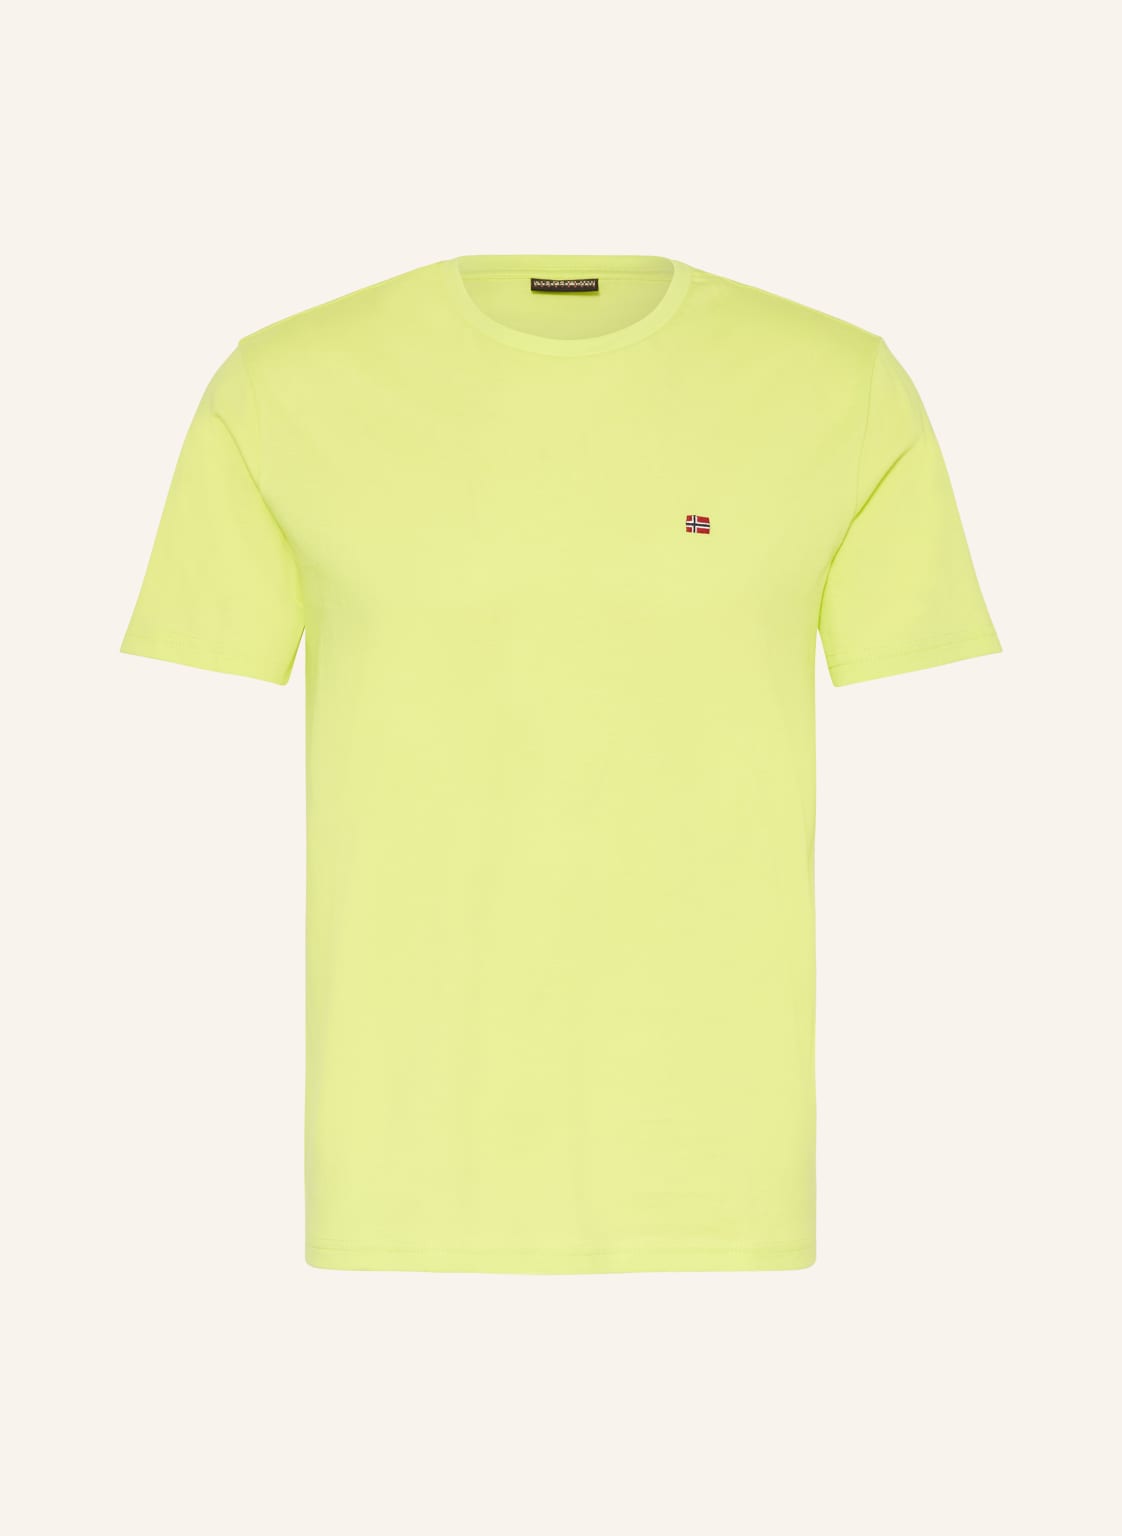 Napapijri T-Shirt Salis gelb von Napapijri